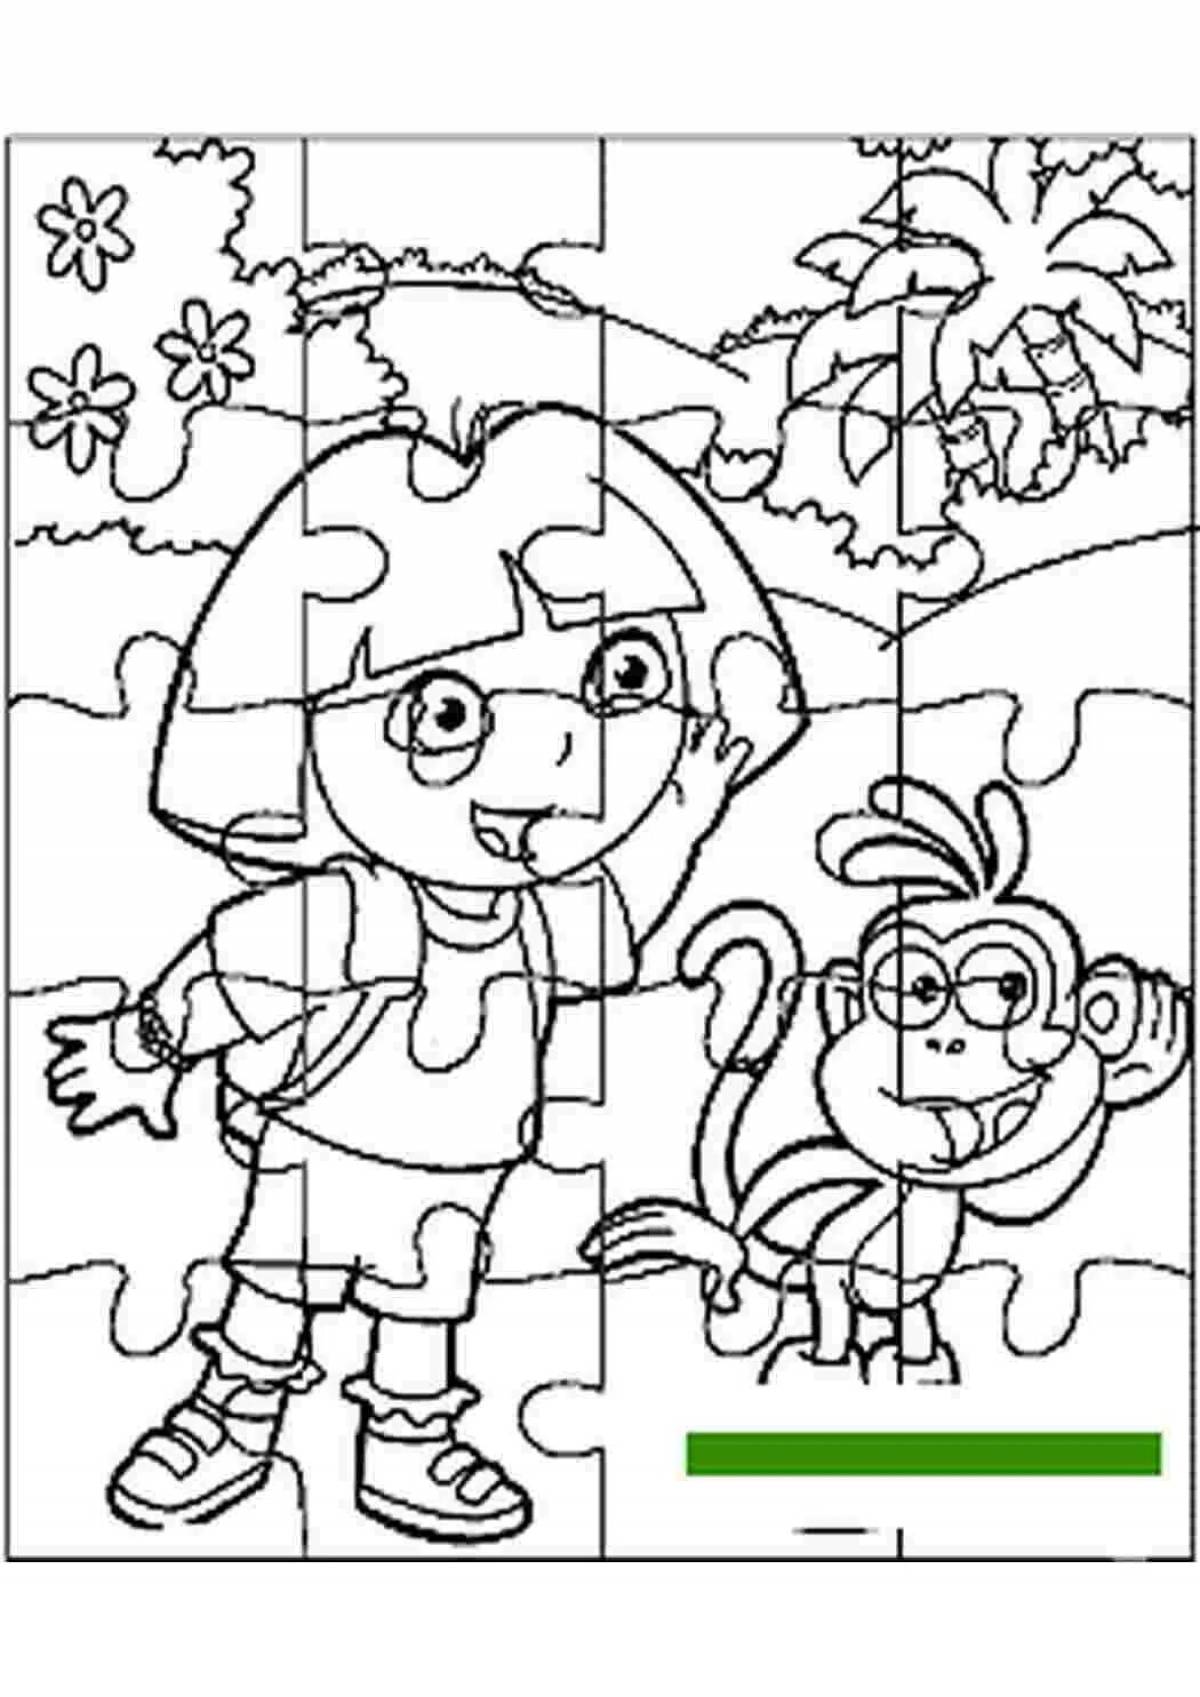 A fun coloring puzzle for preschoolers